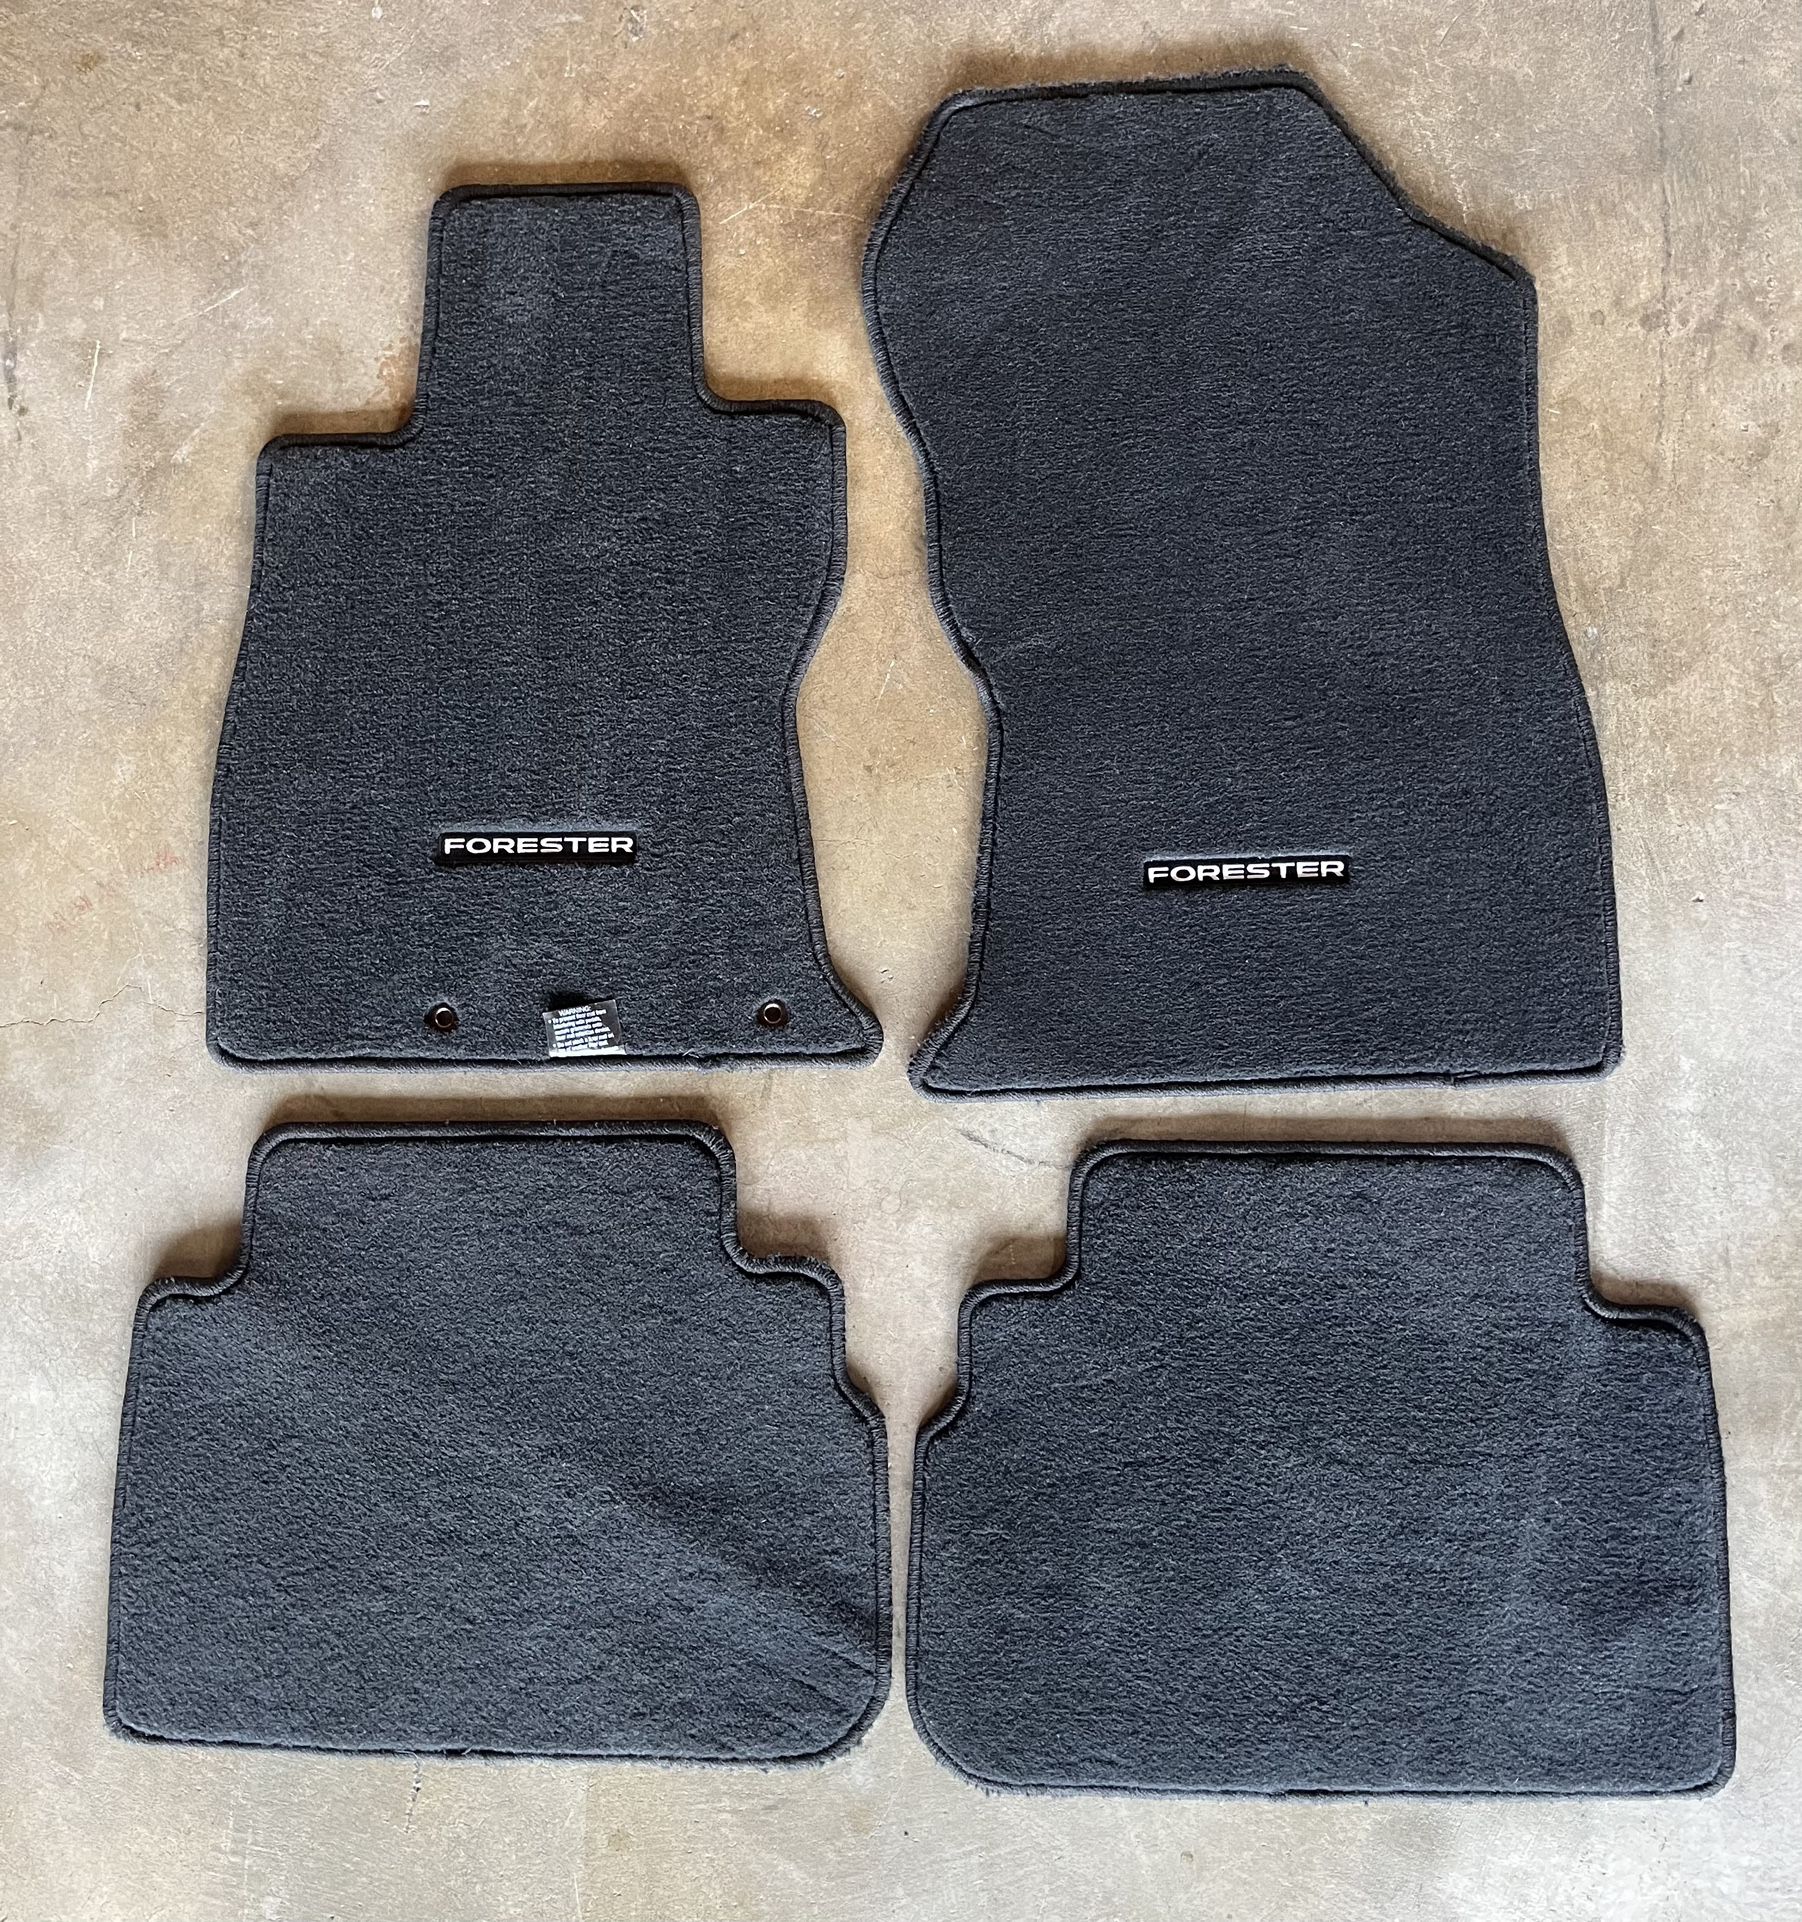 Genuine (OEM) Subaru Forester Floor Mats (Front & Rear) - New! 